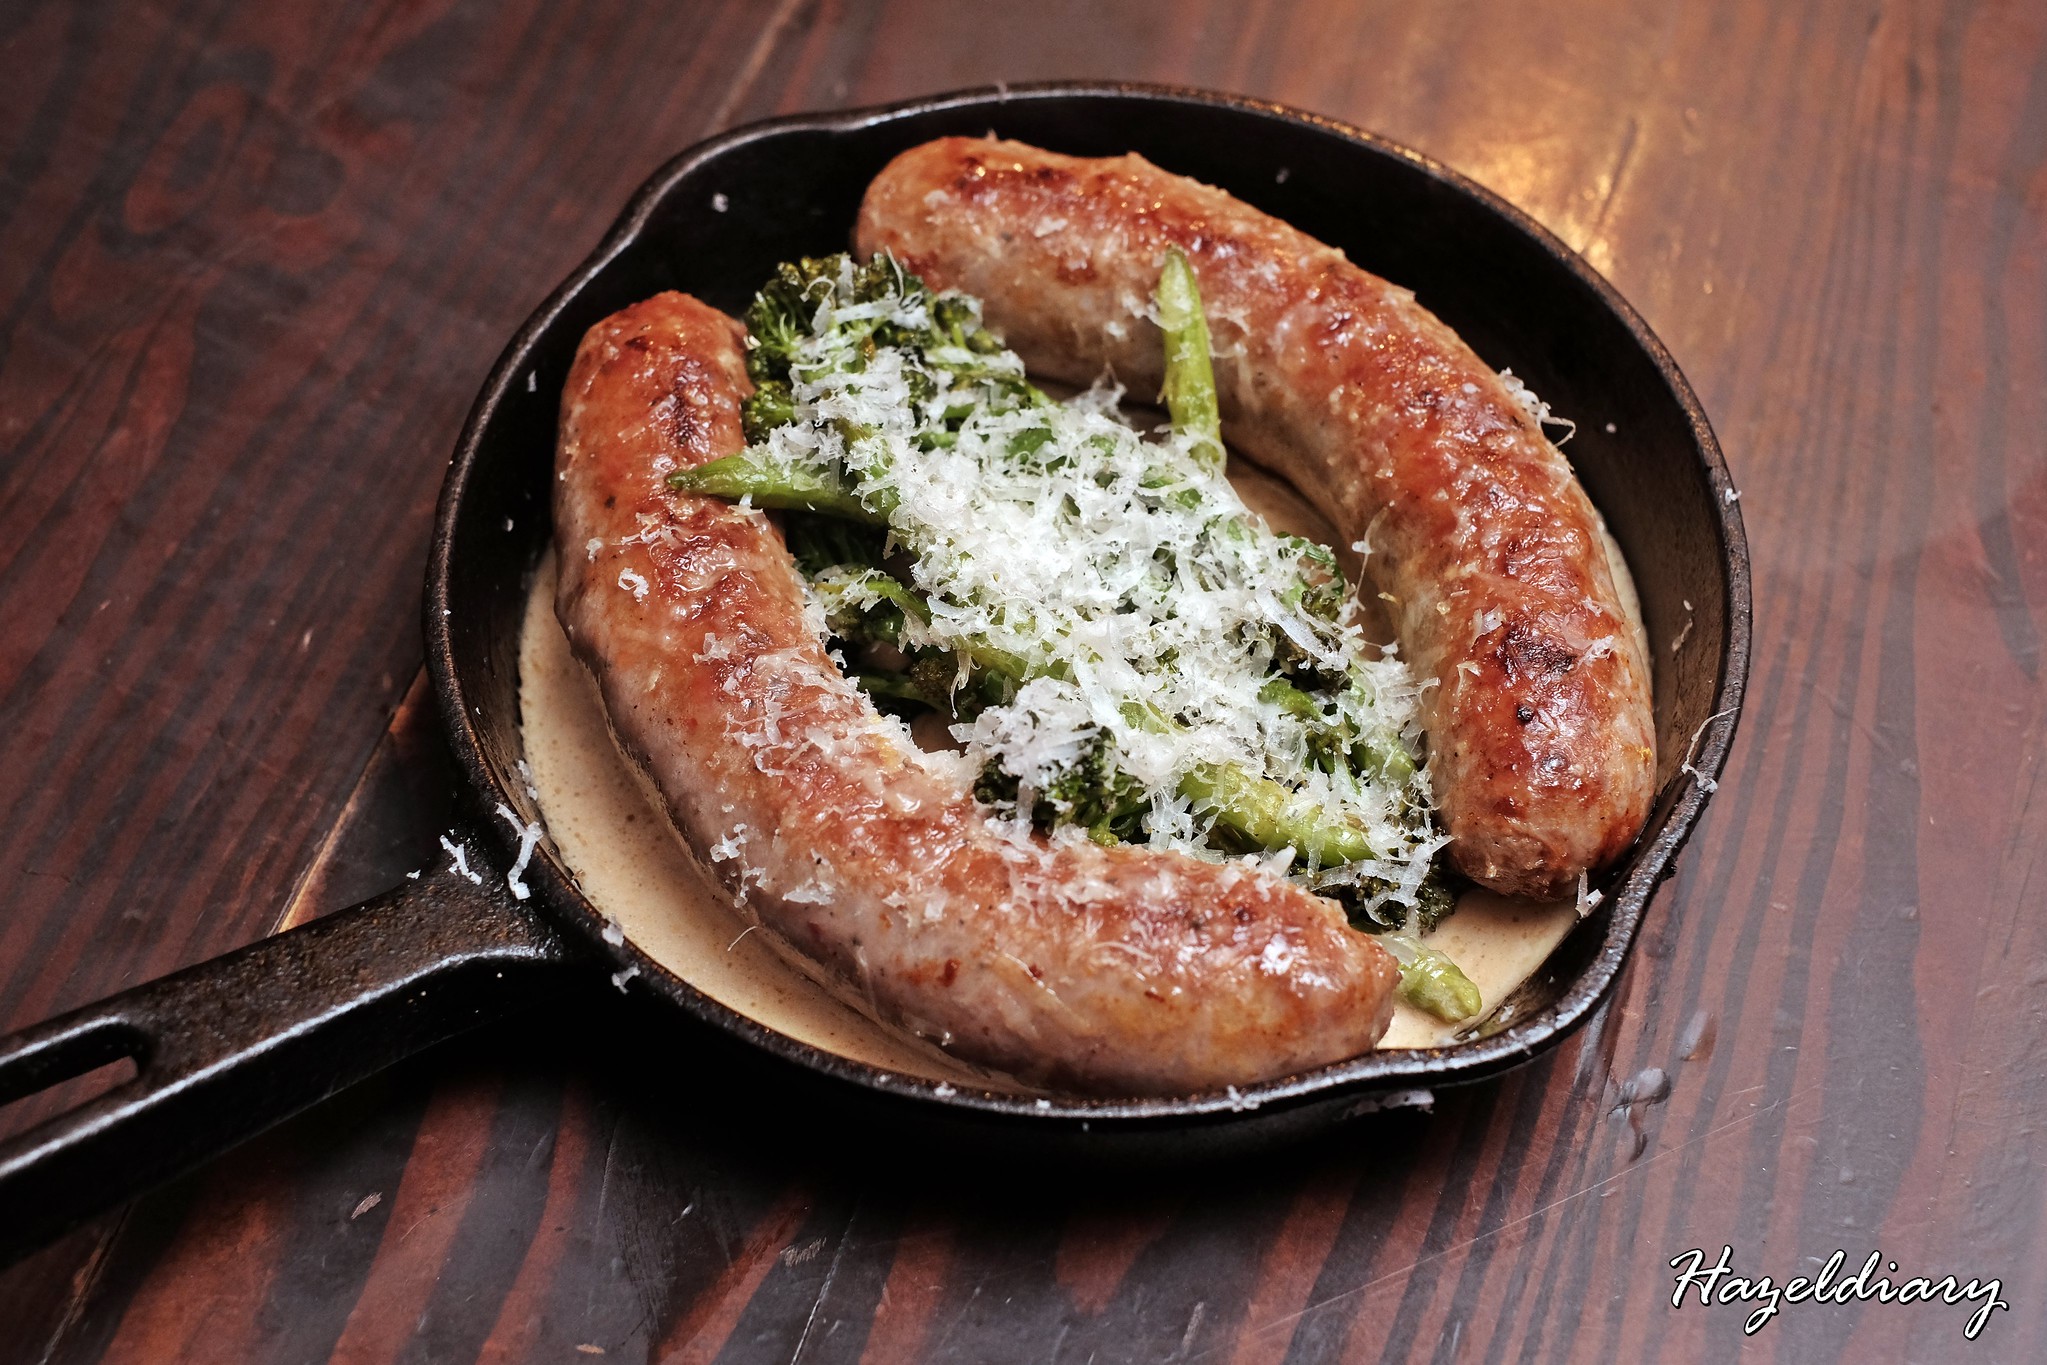 SONS-3-Meat Sausage, Broccoletti & Mustard Sauce